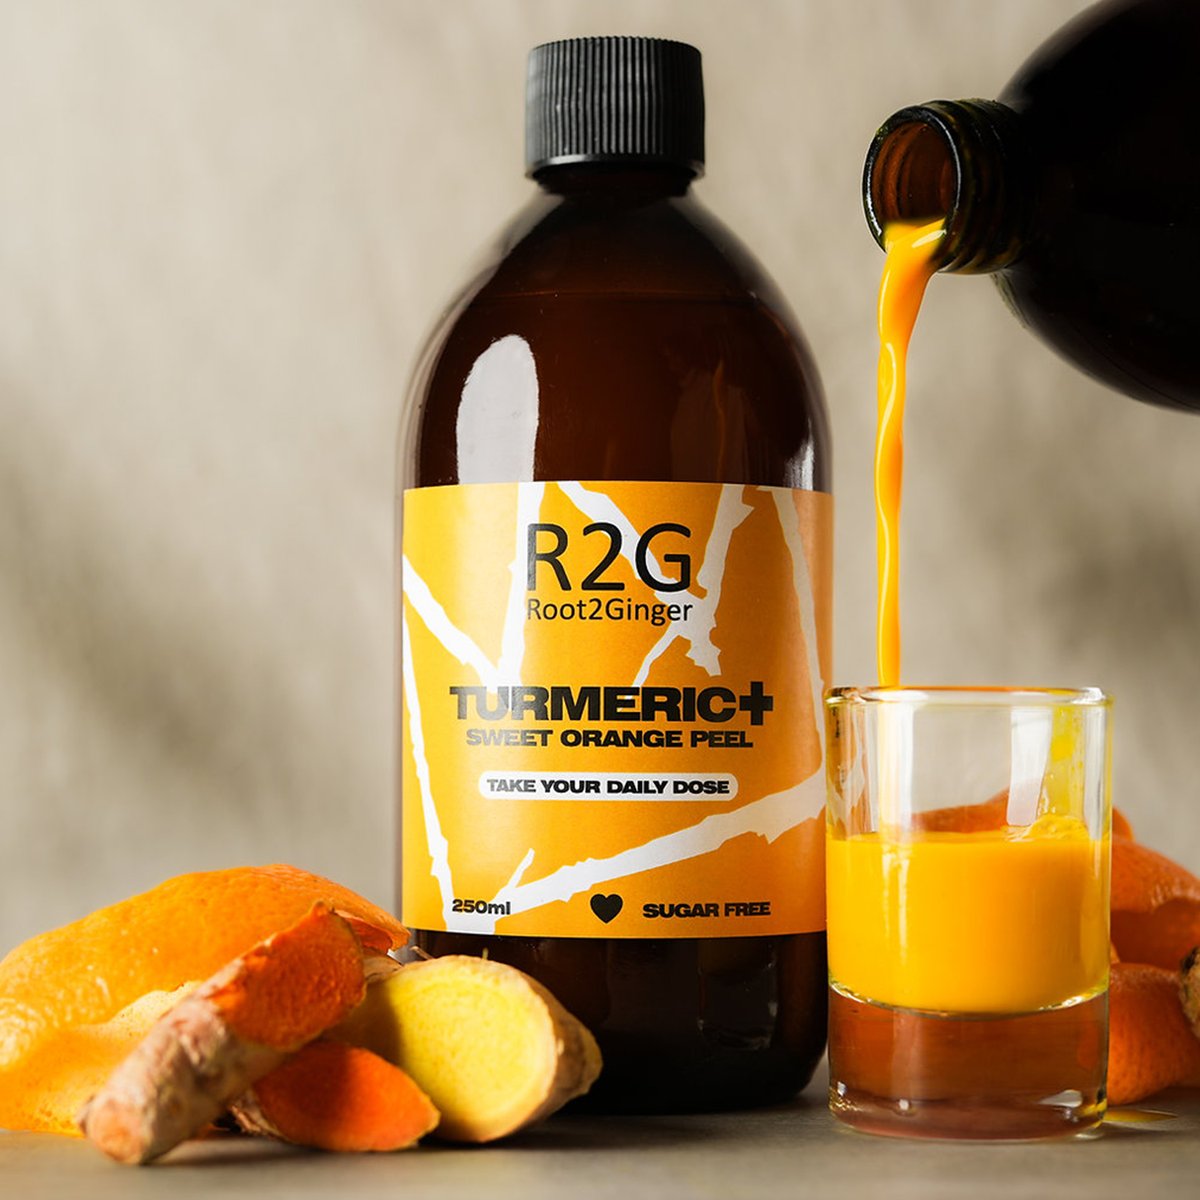 Image of Root2Ginger Turmeric + Sweet Orange Peel